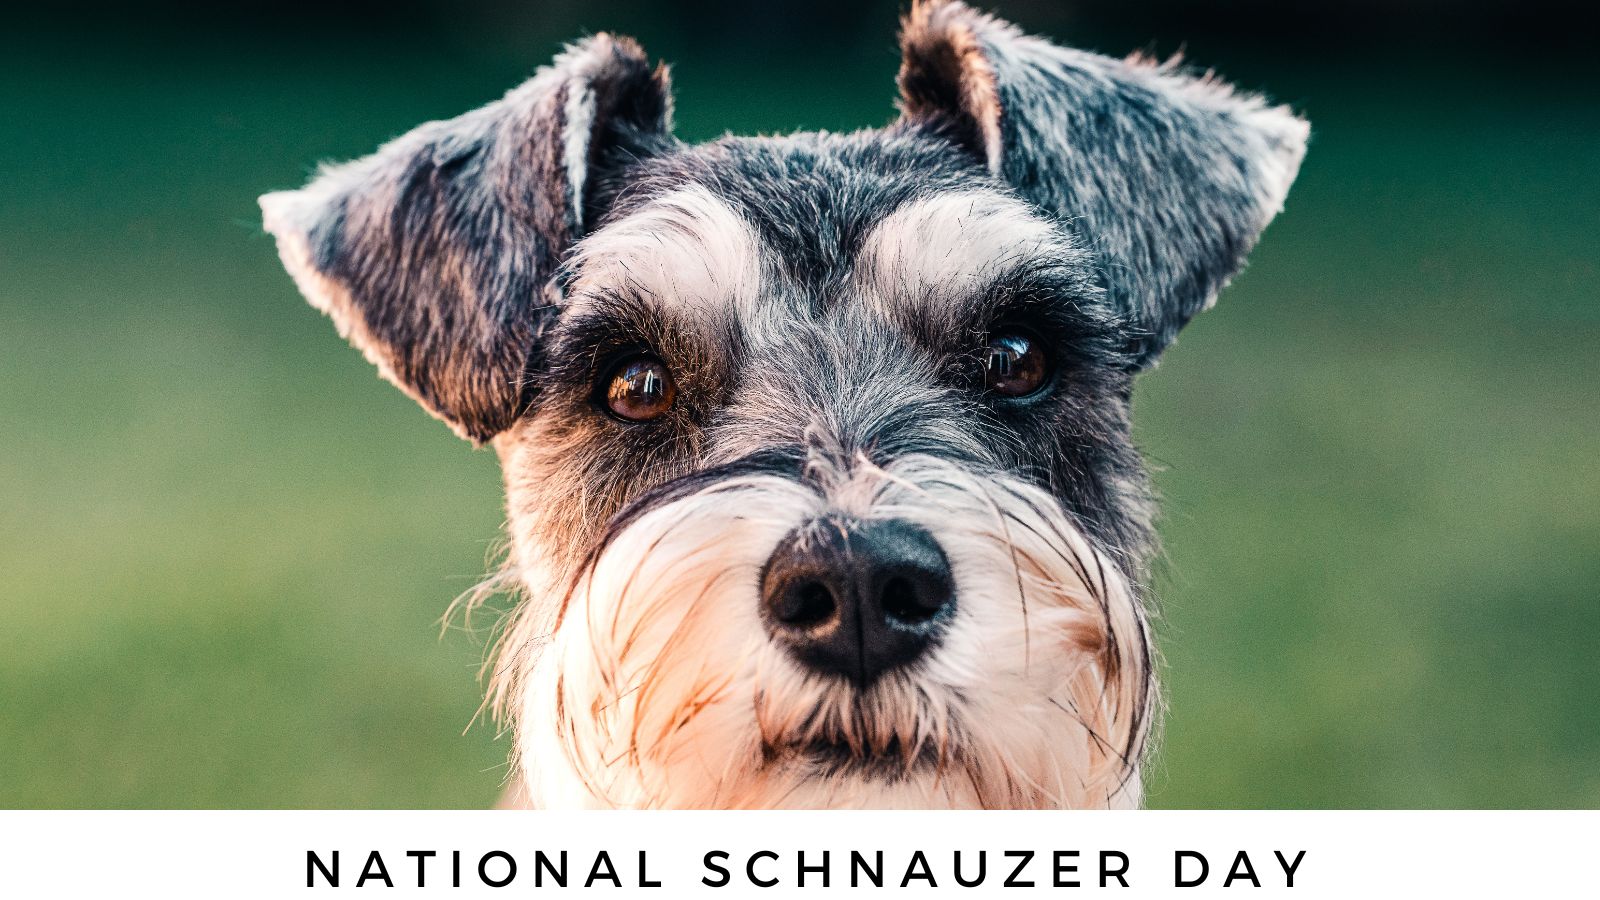 National Schnauzer Day, September 25